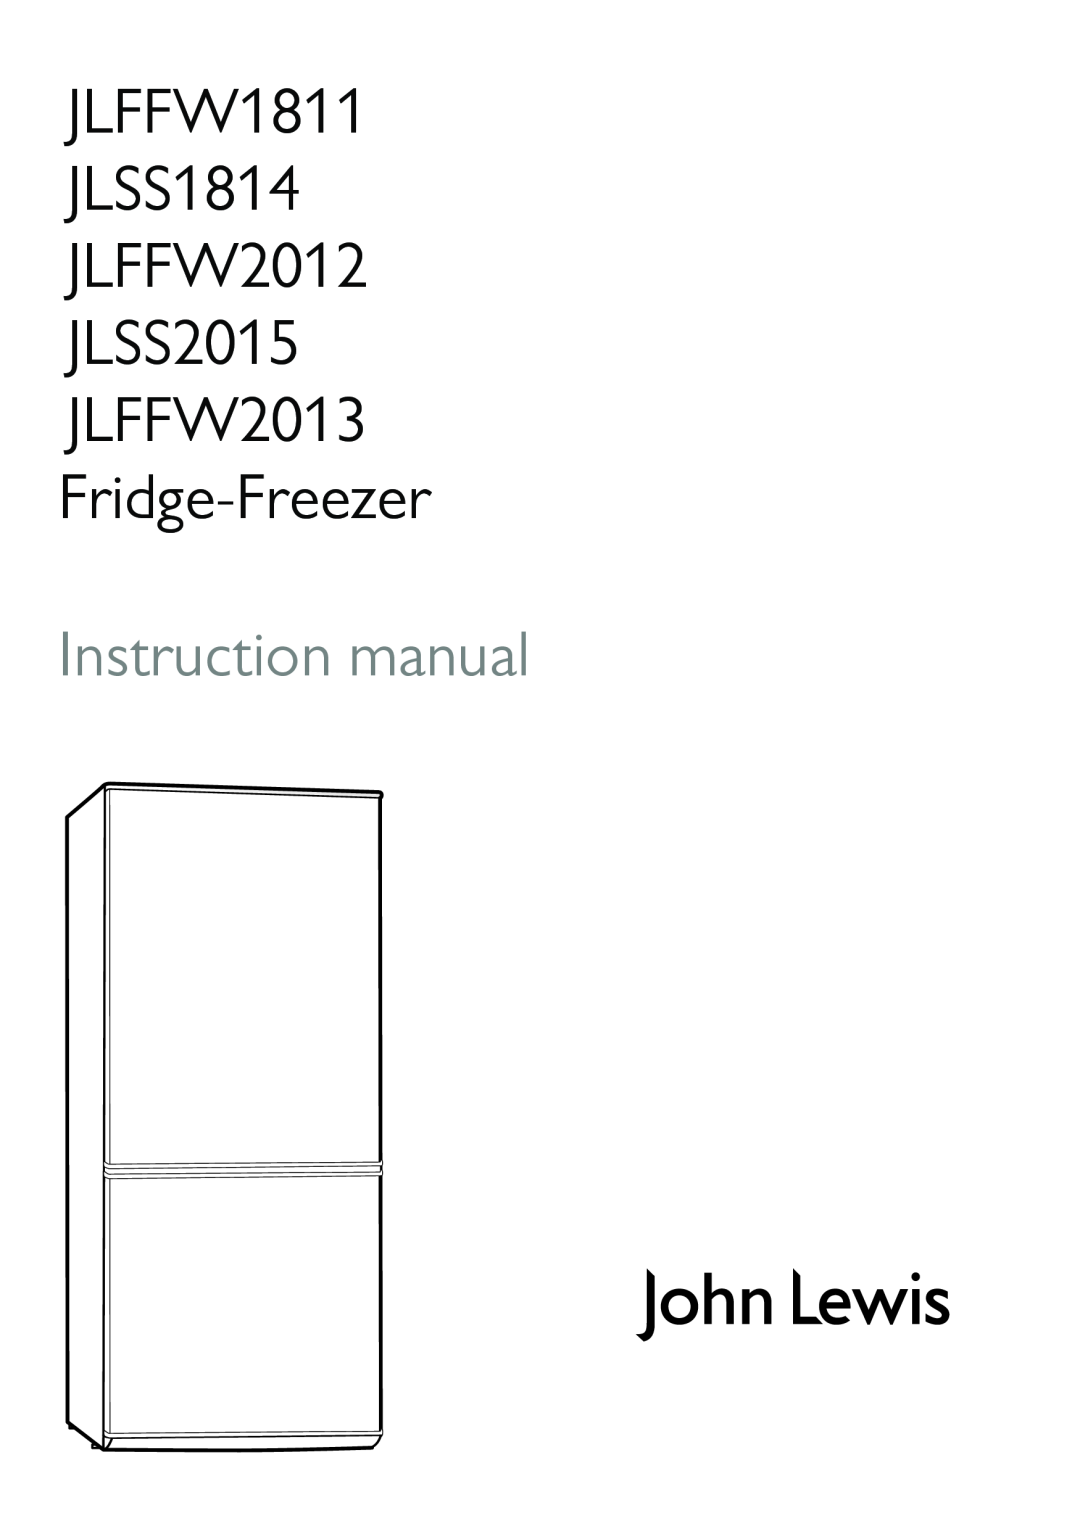 John Lewis instruction manual JLFFW1811 JLSS1814 JLFFW2012 JLSS2015, JLFFW2013 Fridge-Freezer 